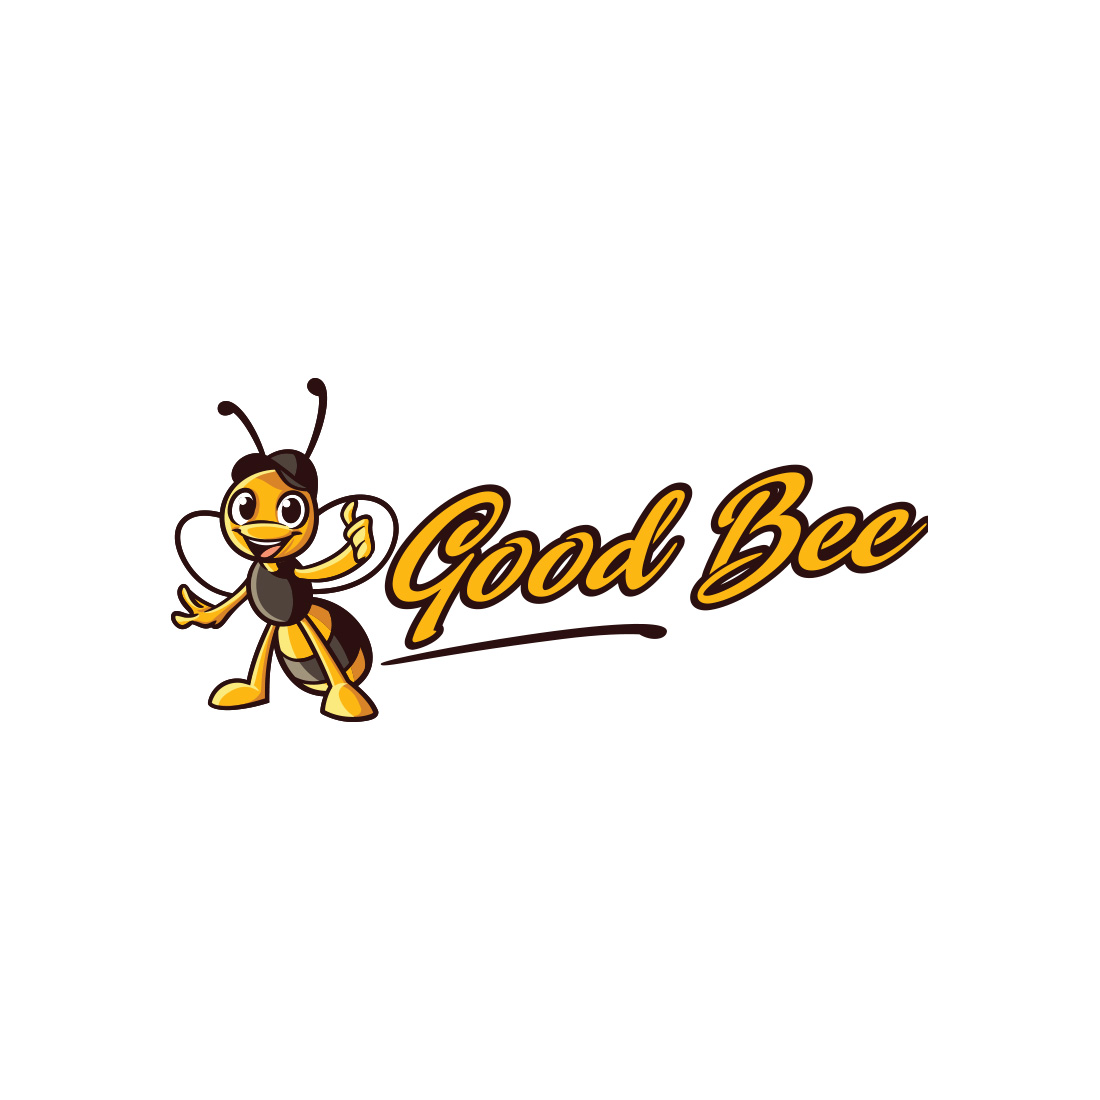 Good Bee Character Mascot Logo Design cover image.